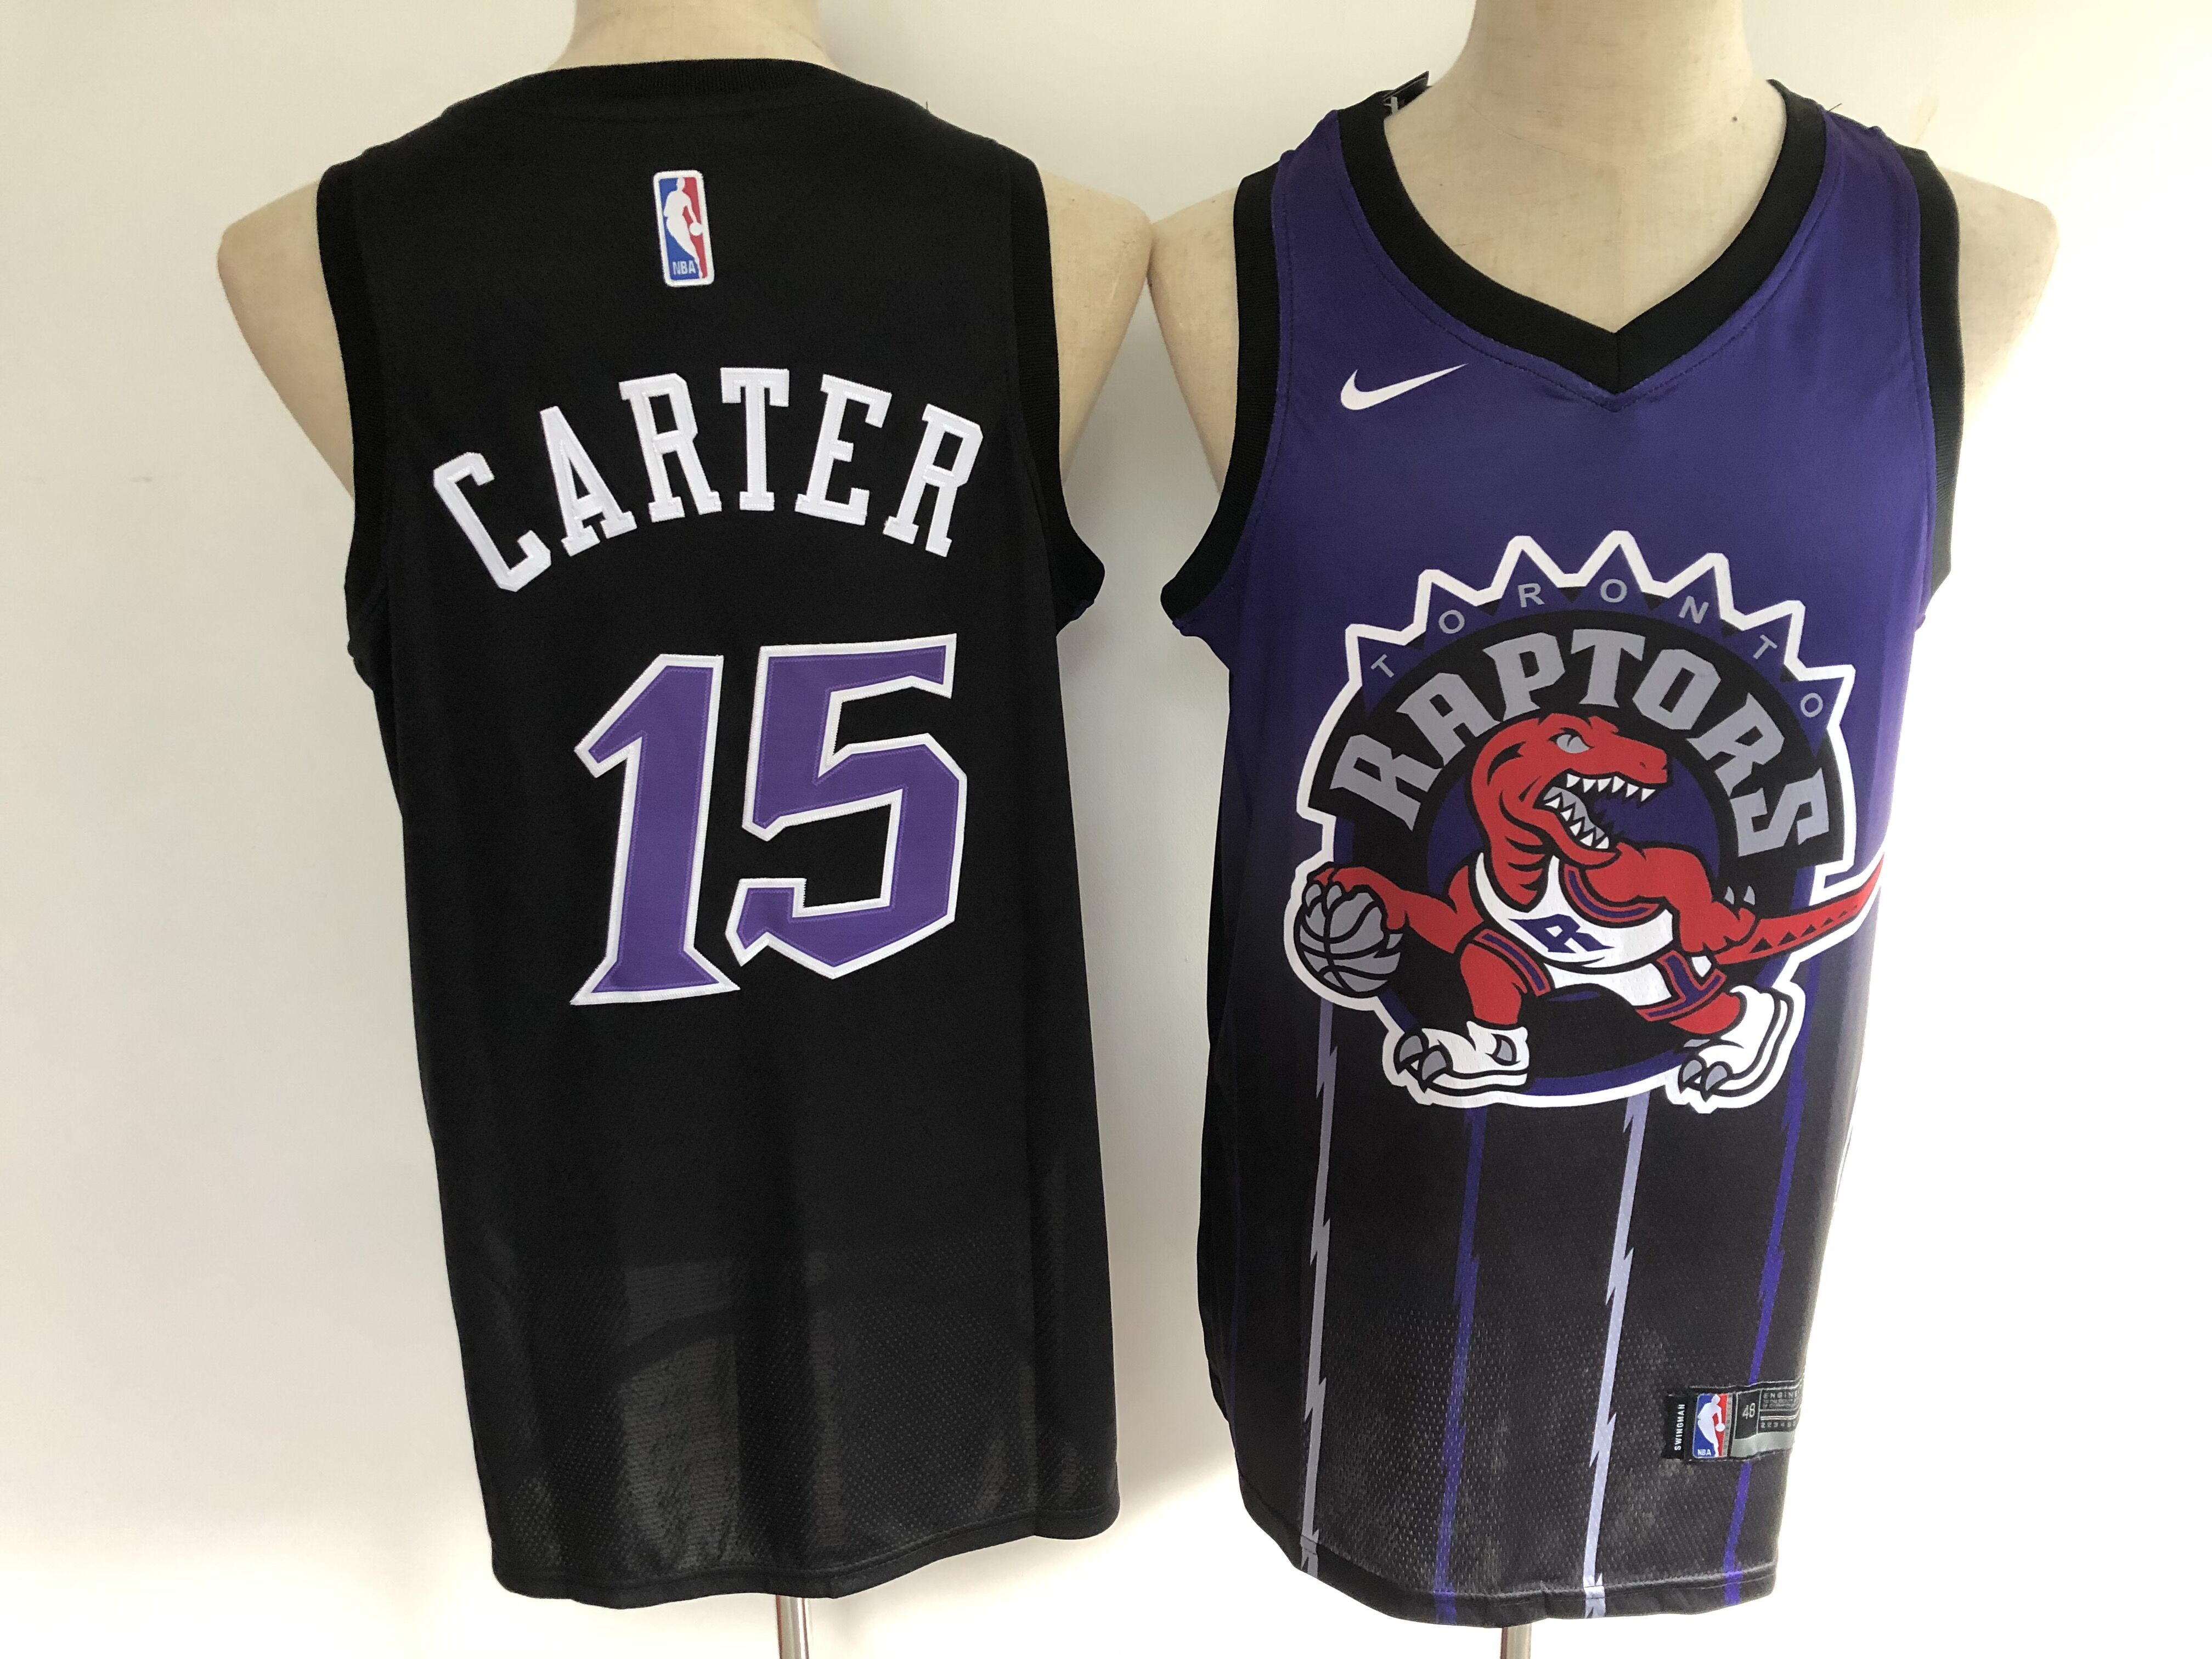 2020 Men Toronto Raptors #15 Carter Purple NBA Jerseys